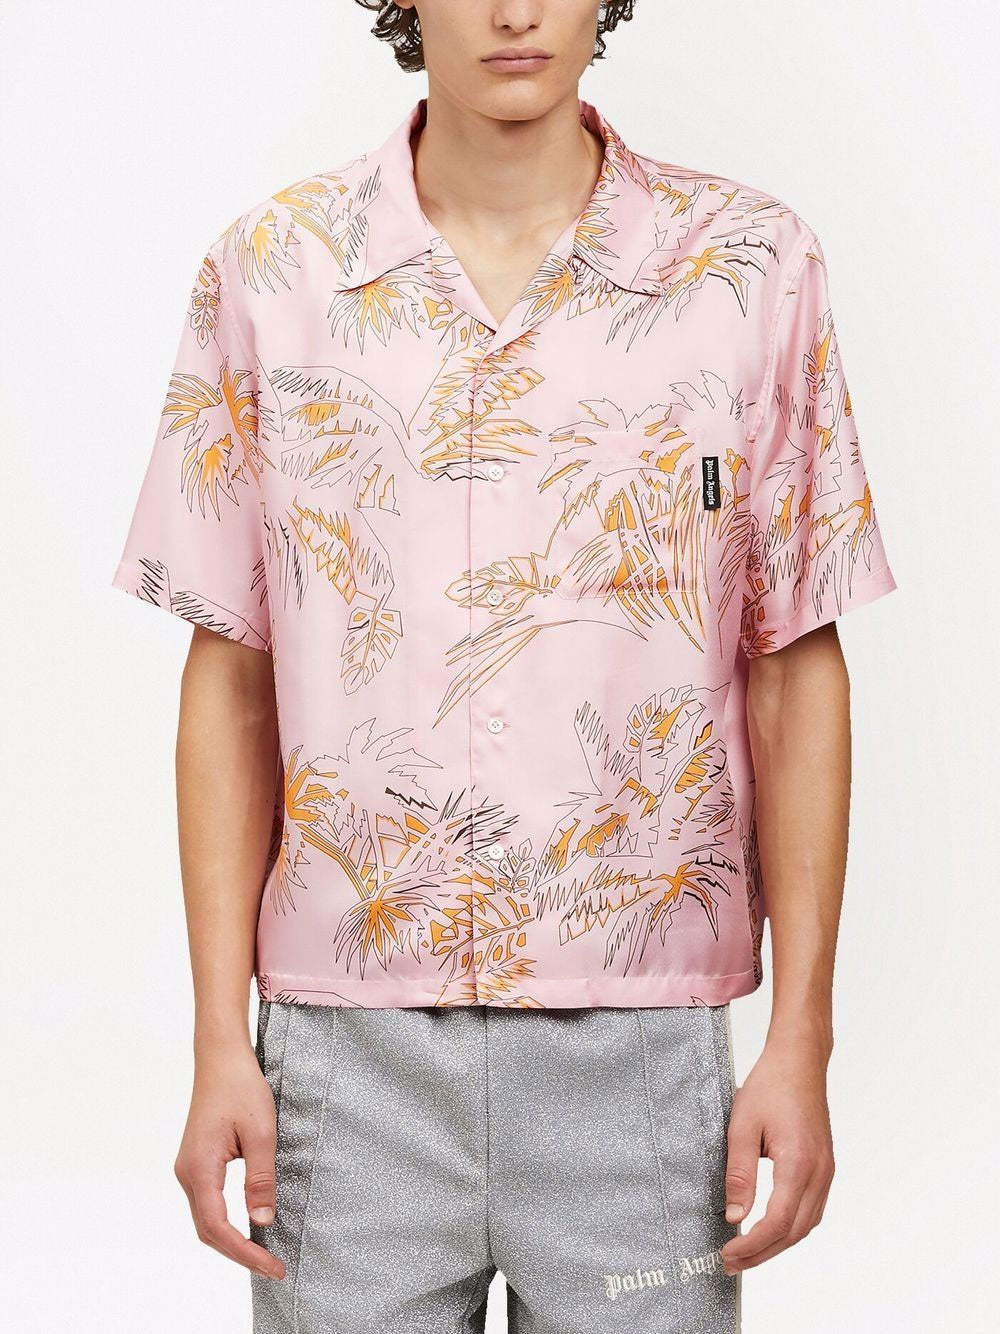 Abstract Palms bowling shirt